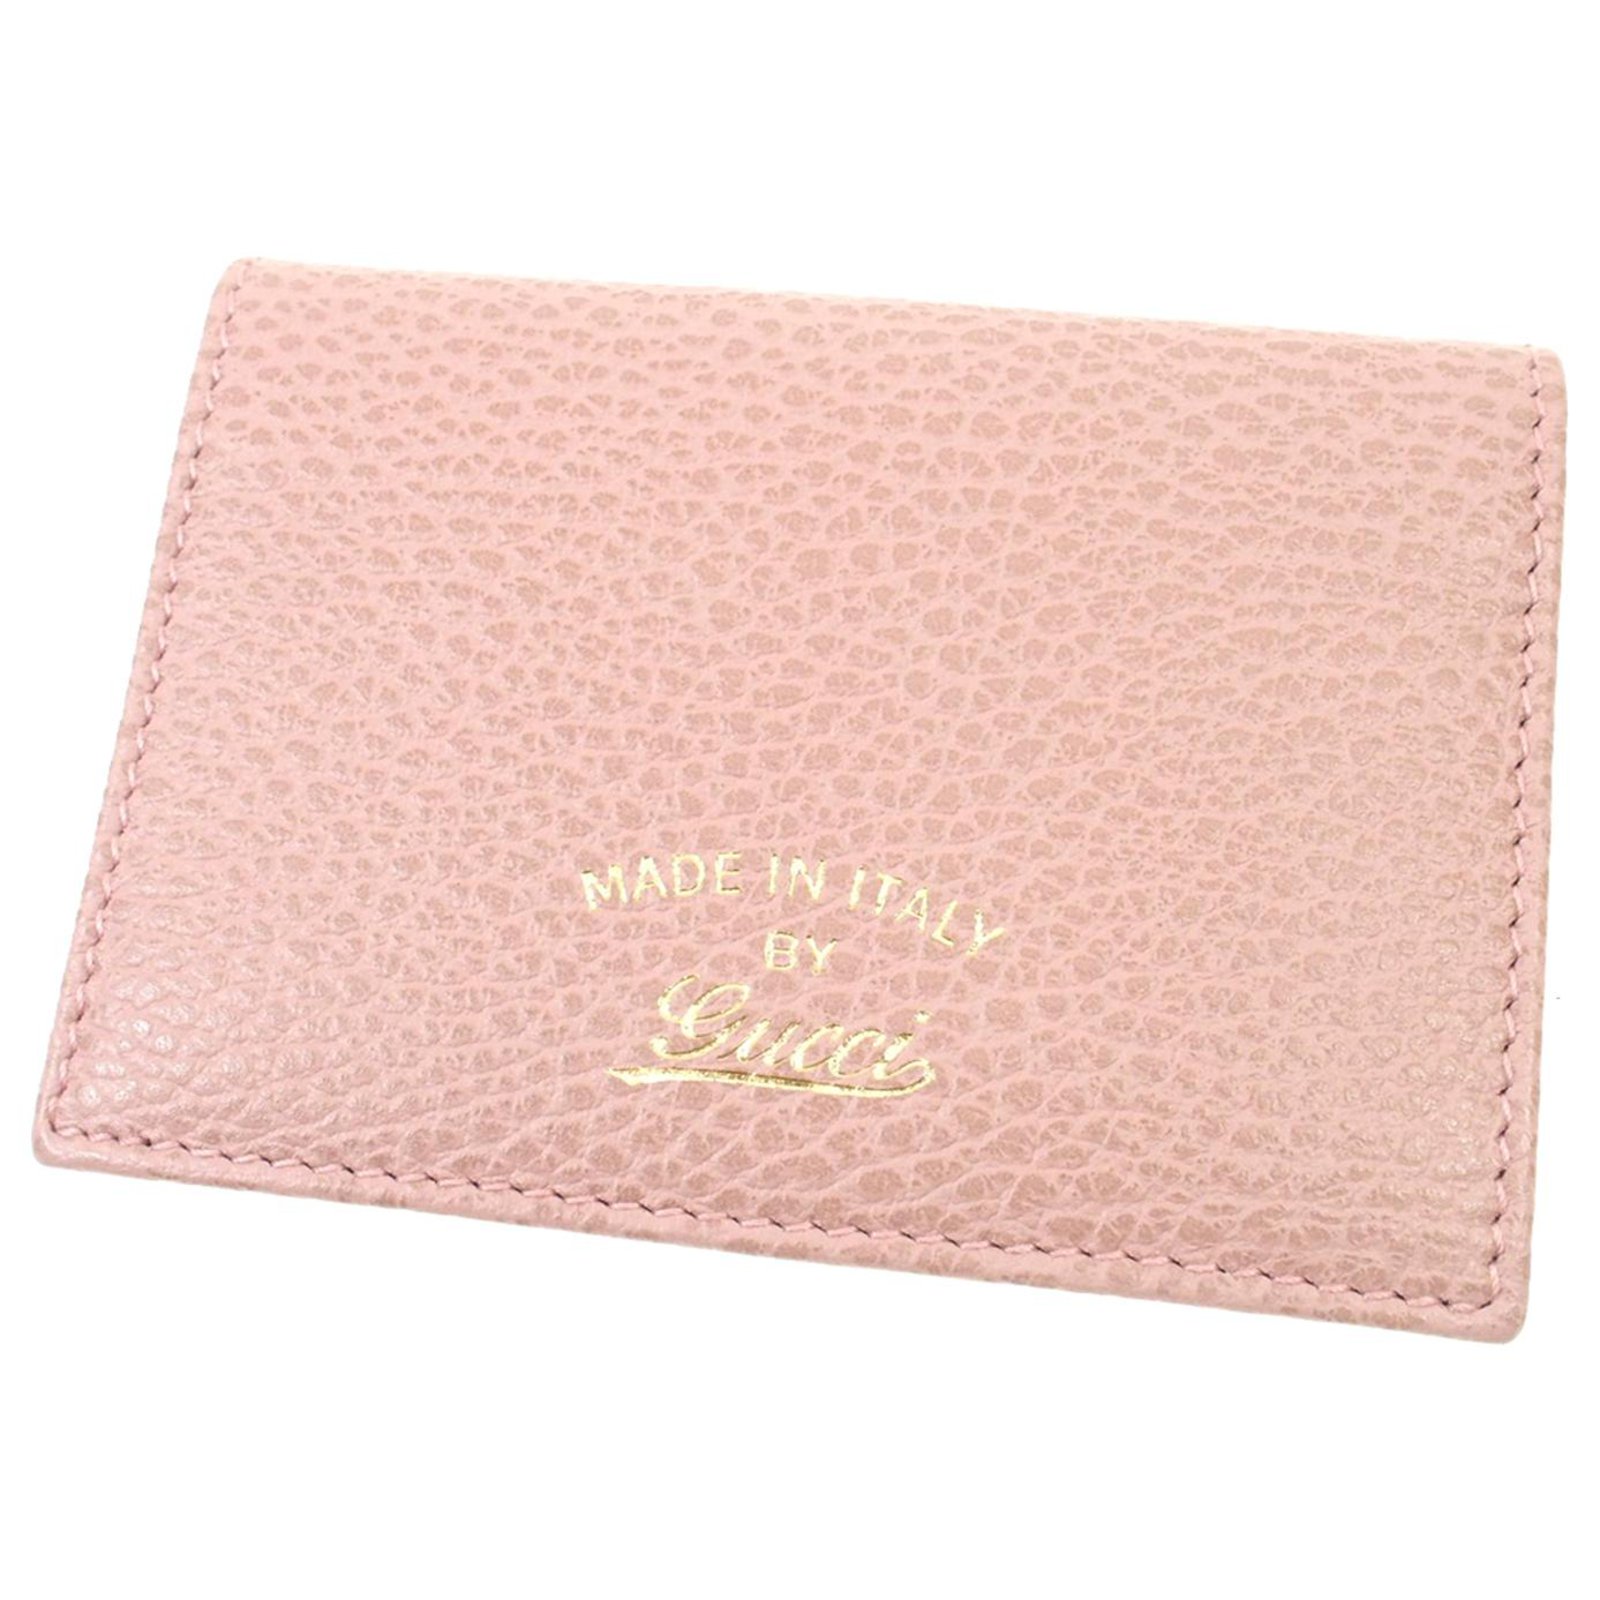 Gucci Gucci Pink Swing Leather Passport 